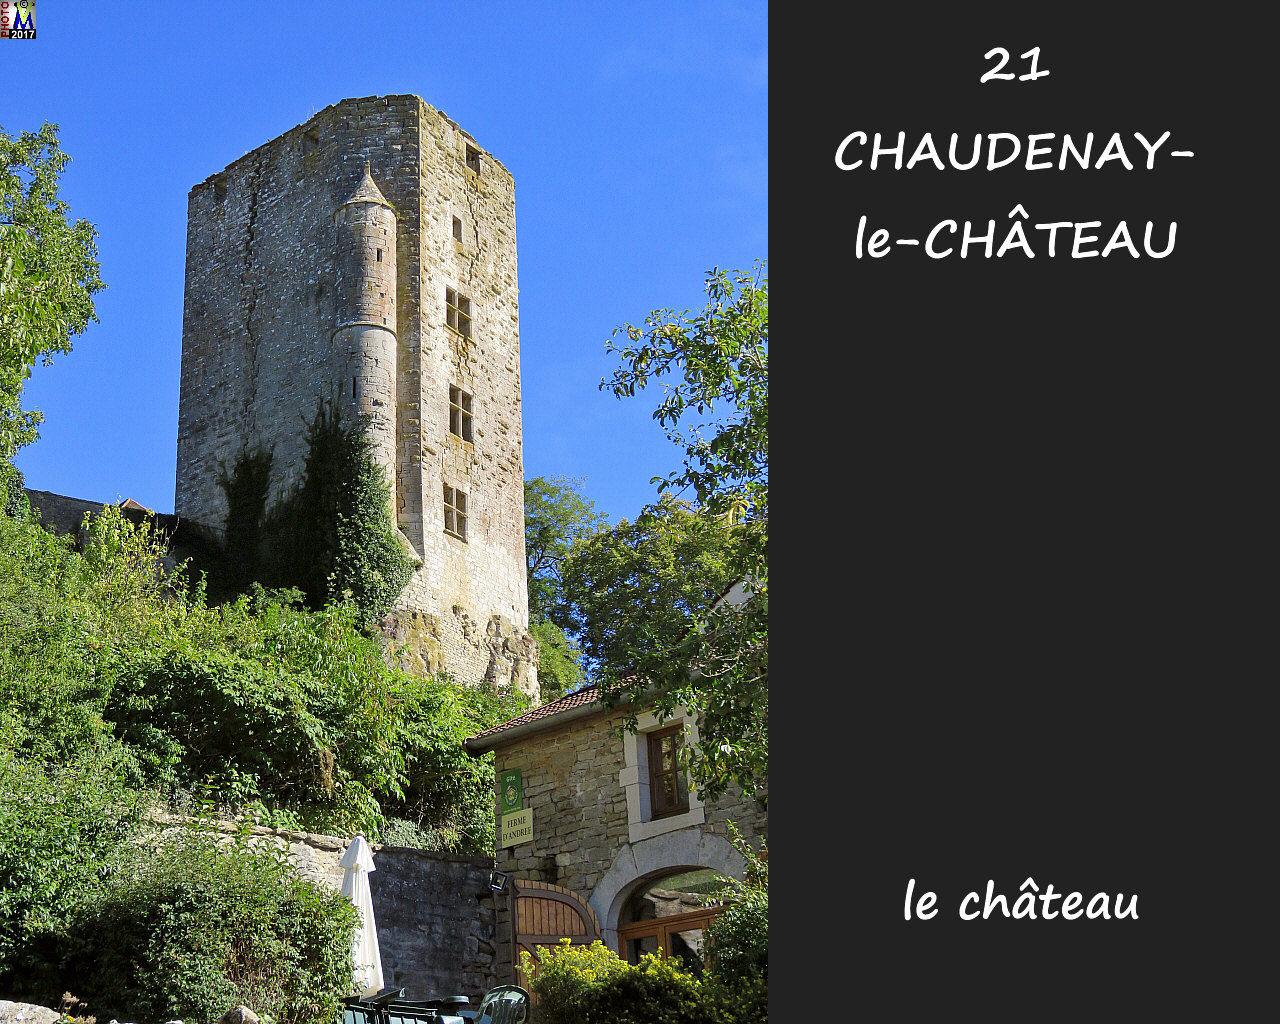 21CHAUDENAY-le-CHATEAU_chateau_106.jpg